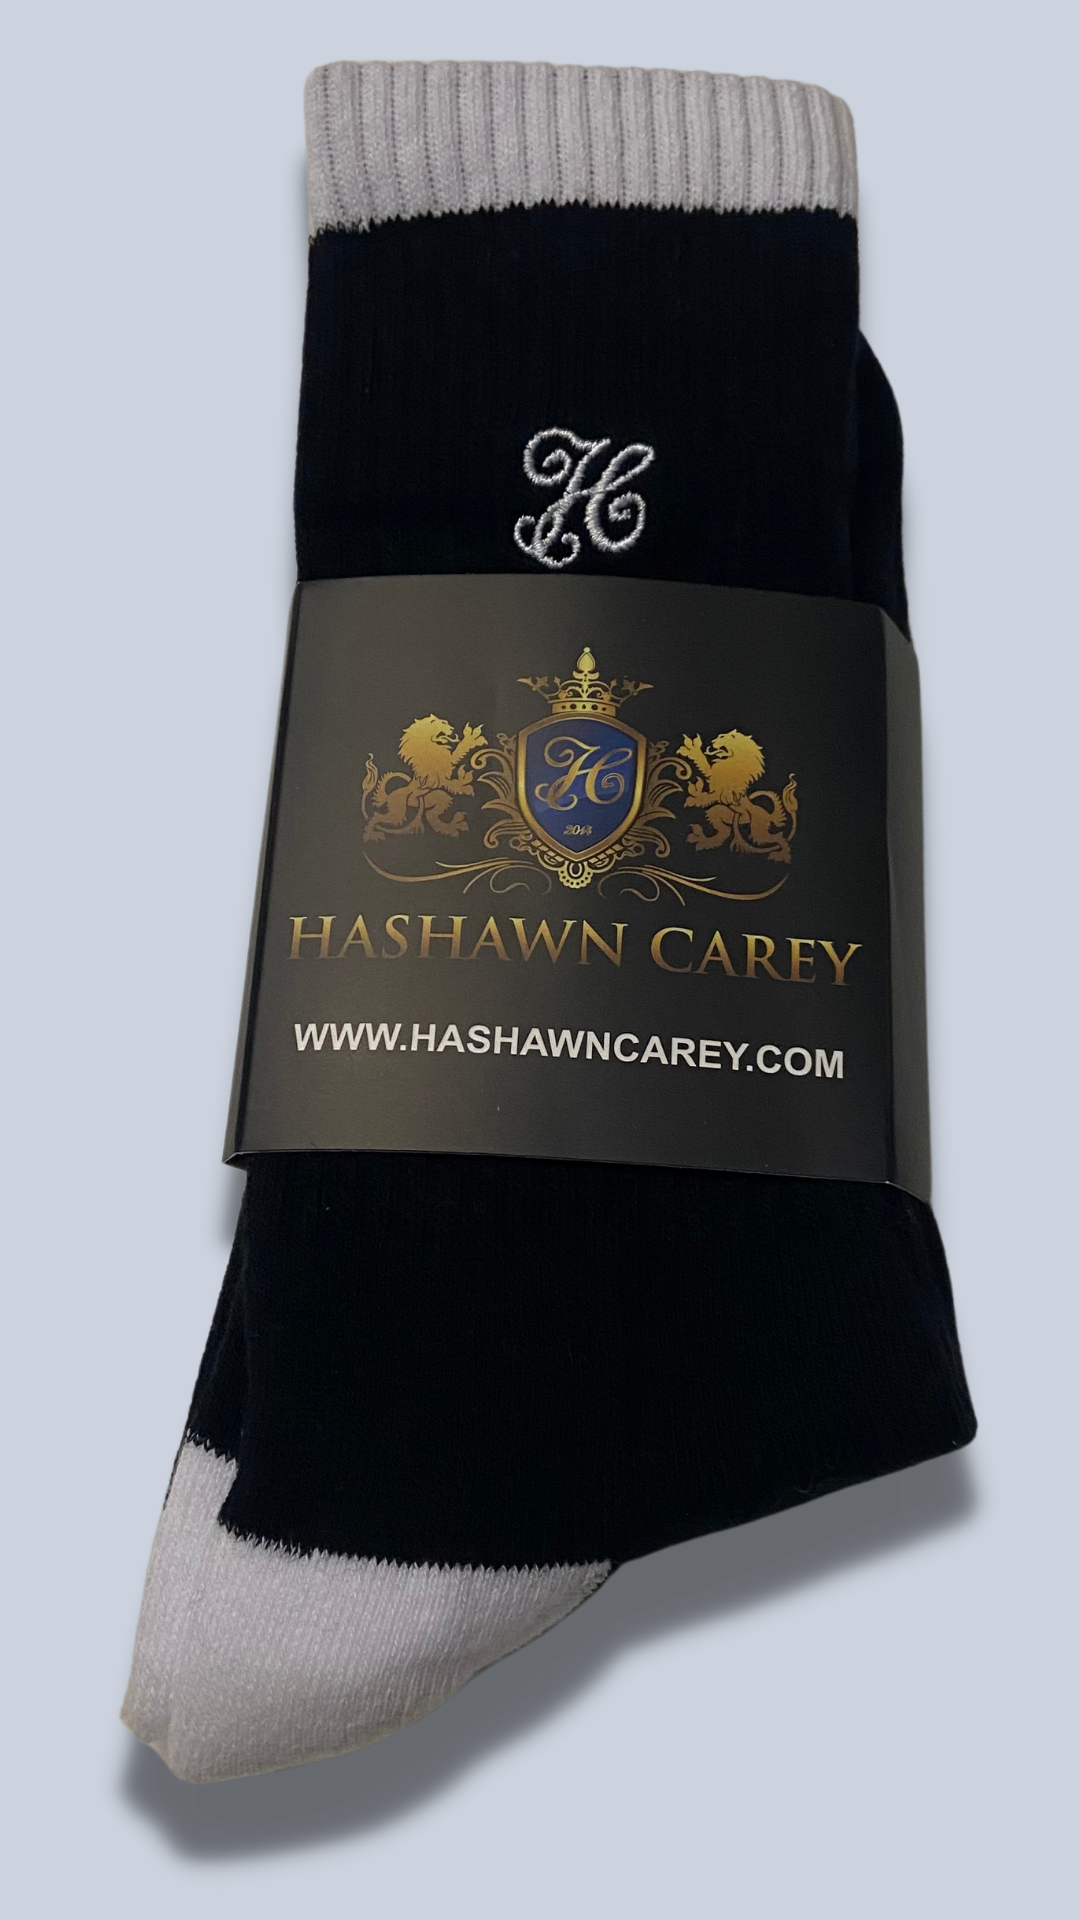 Hashawn Carey's Socks